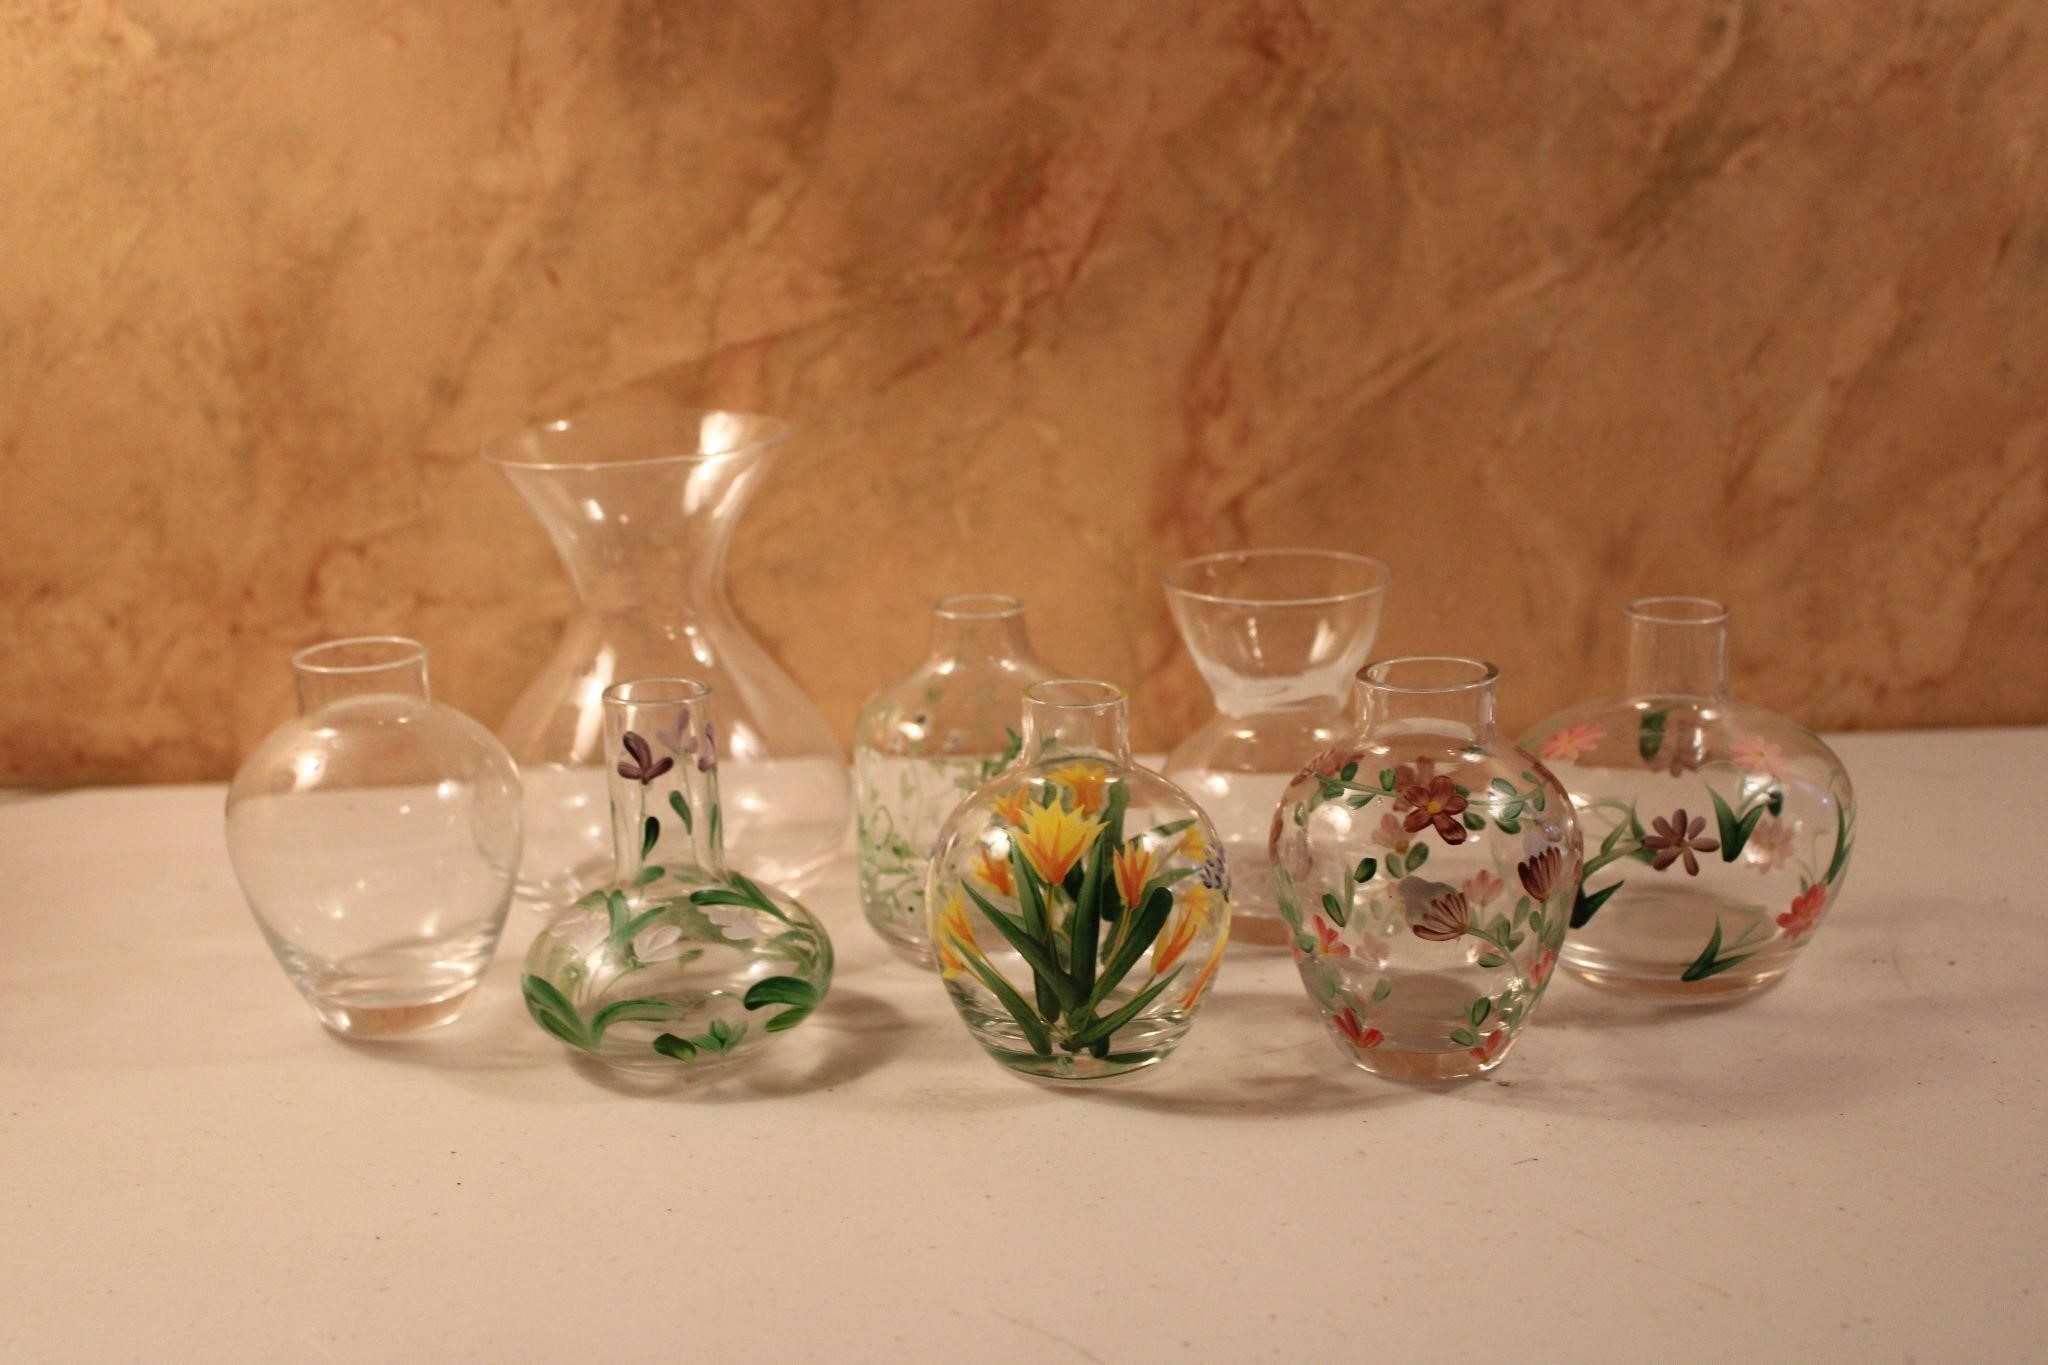 Propagation vases